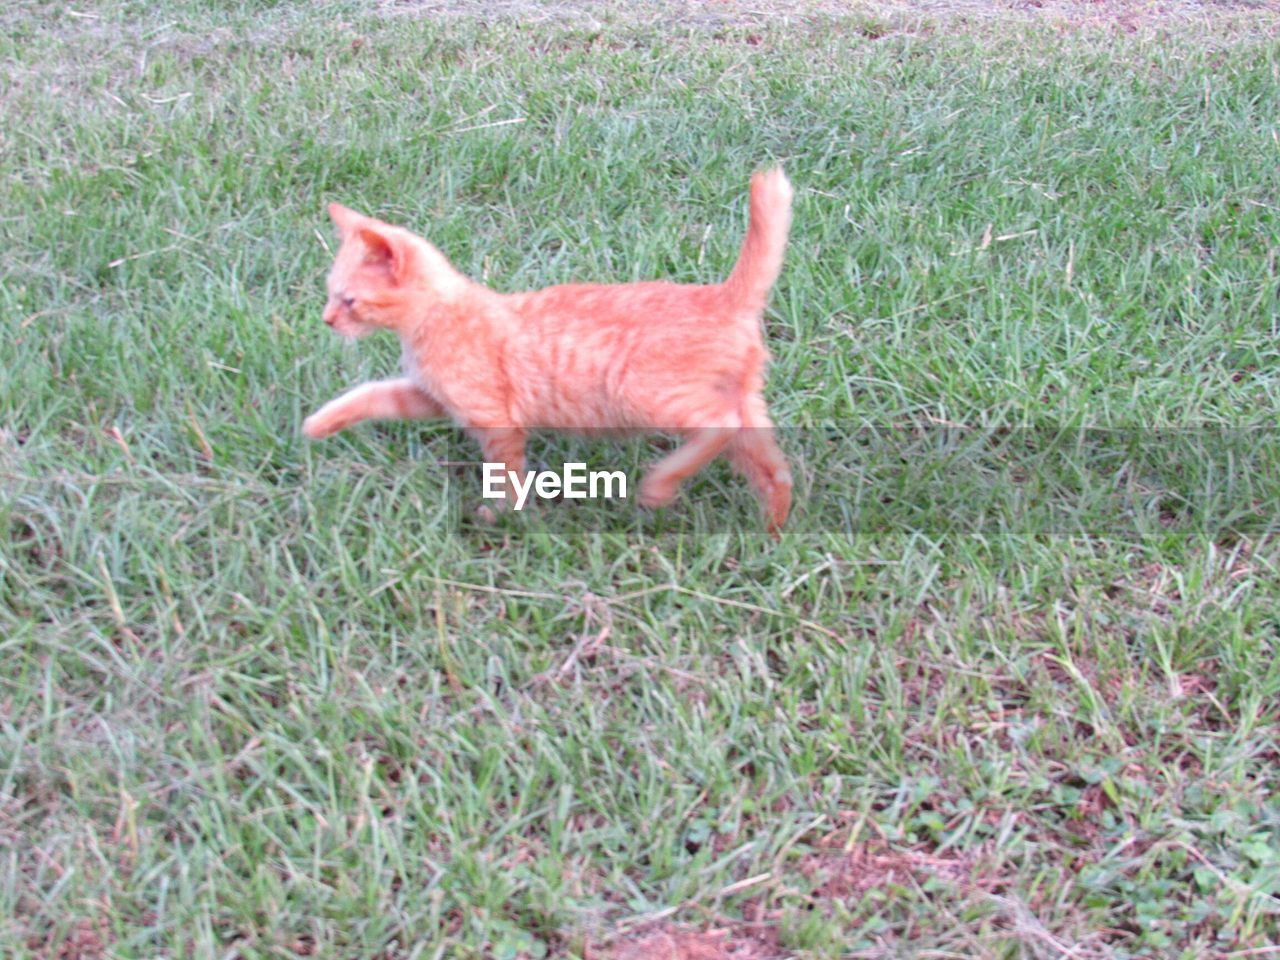 PORTRAIT OF A CAT RUNNING ON GRASS